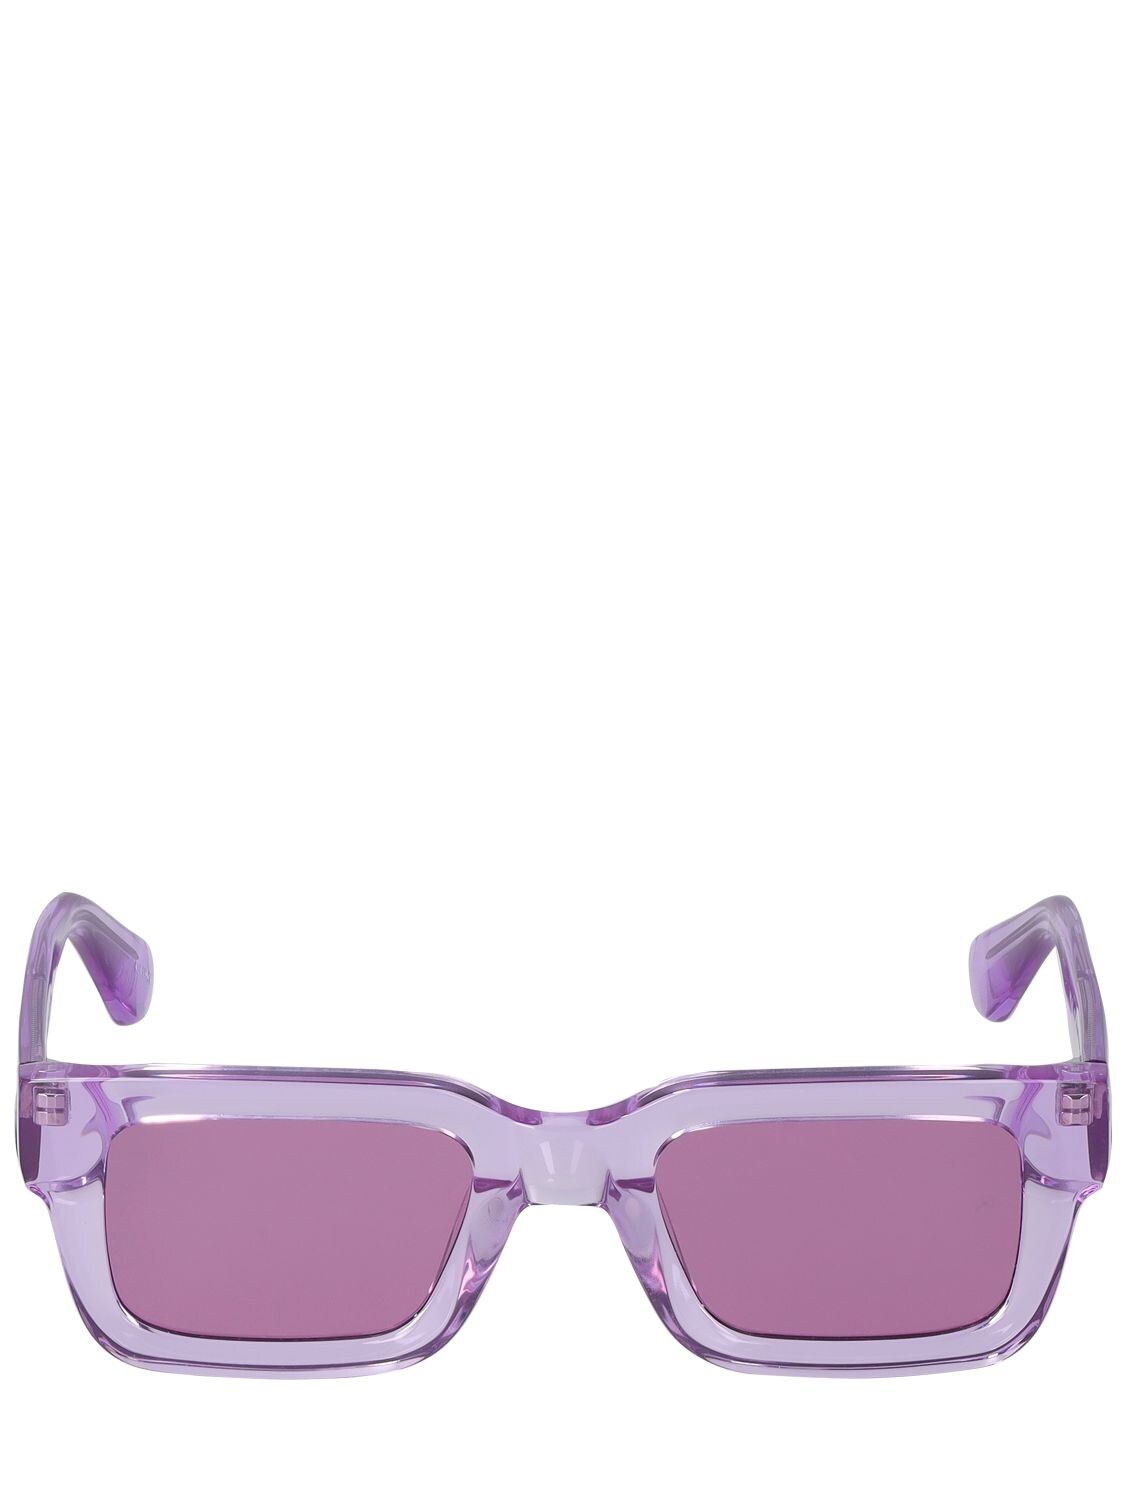 Chimi Purple 05 Squared Acetate Sunglasses